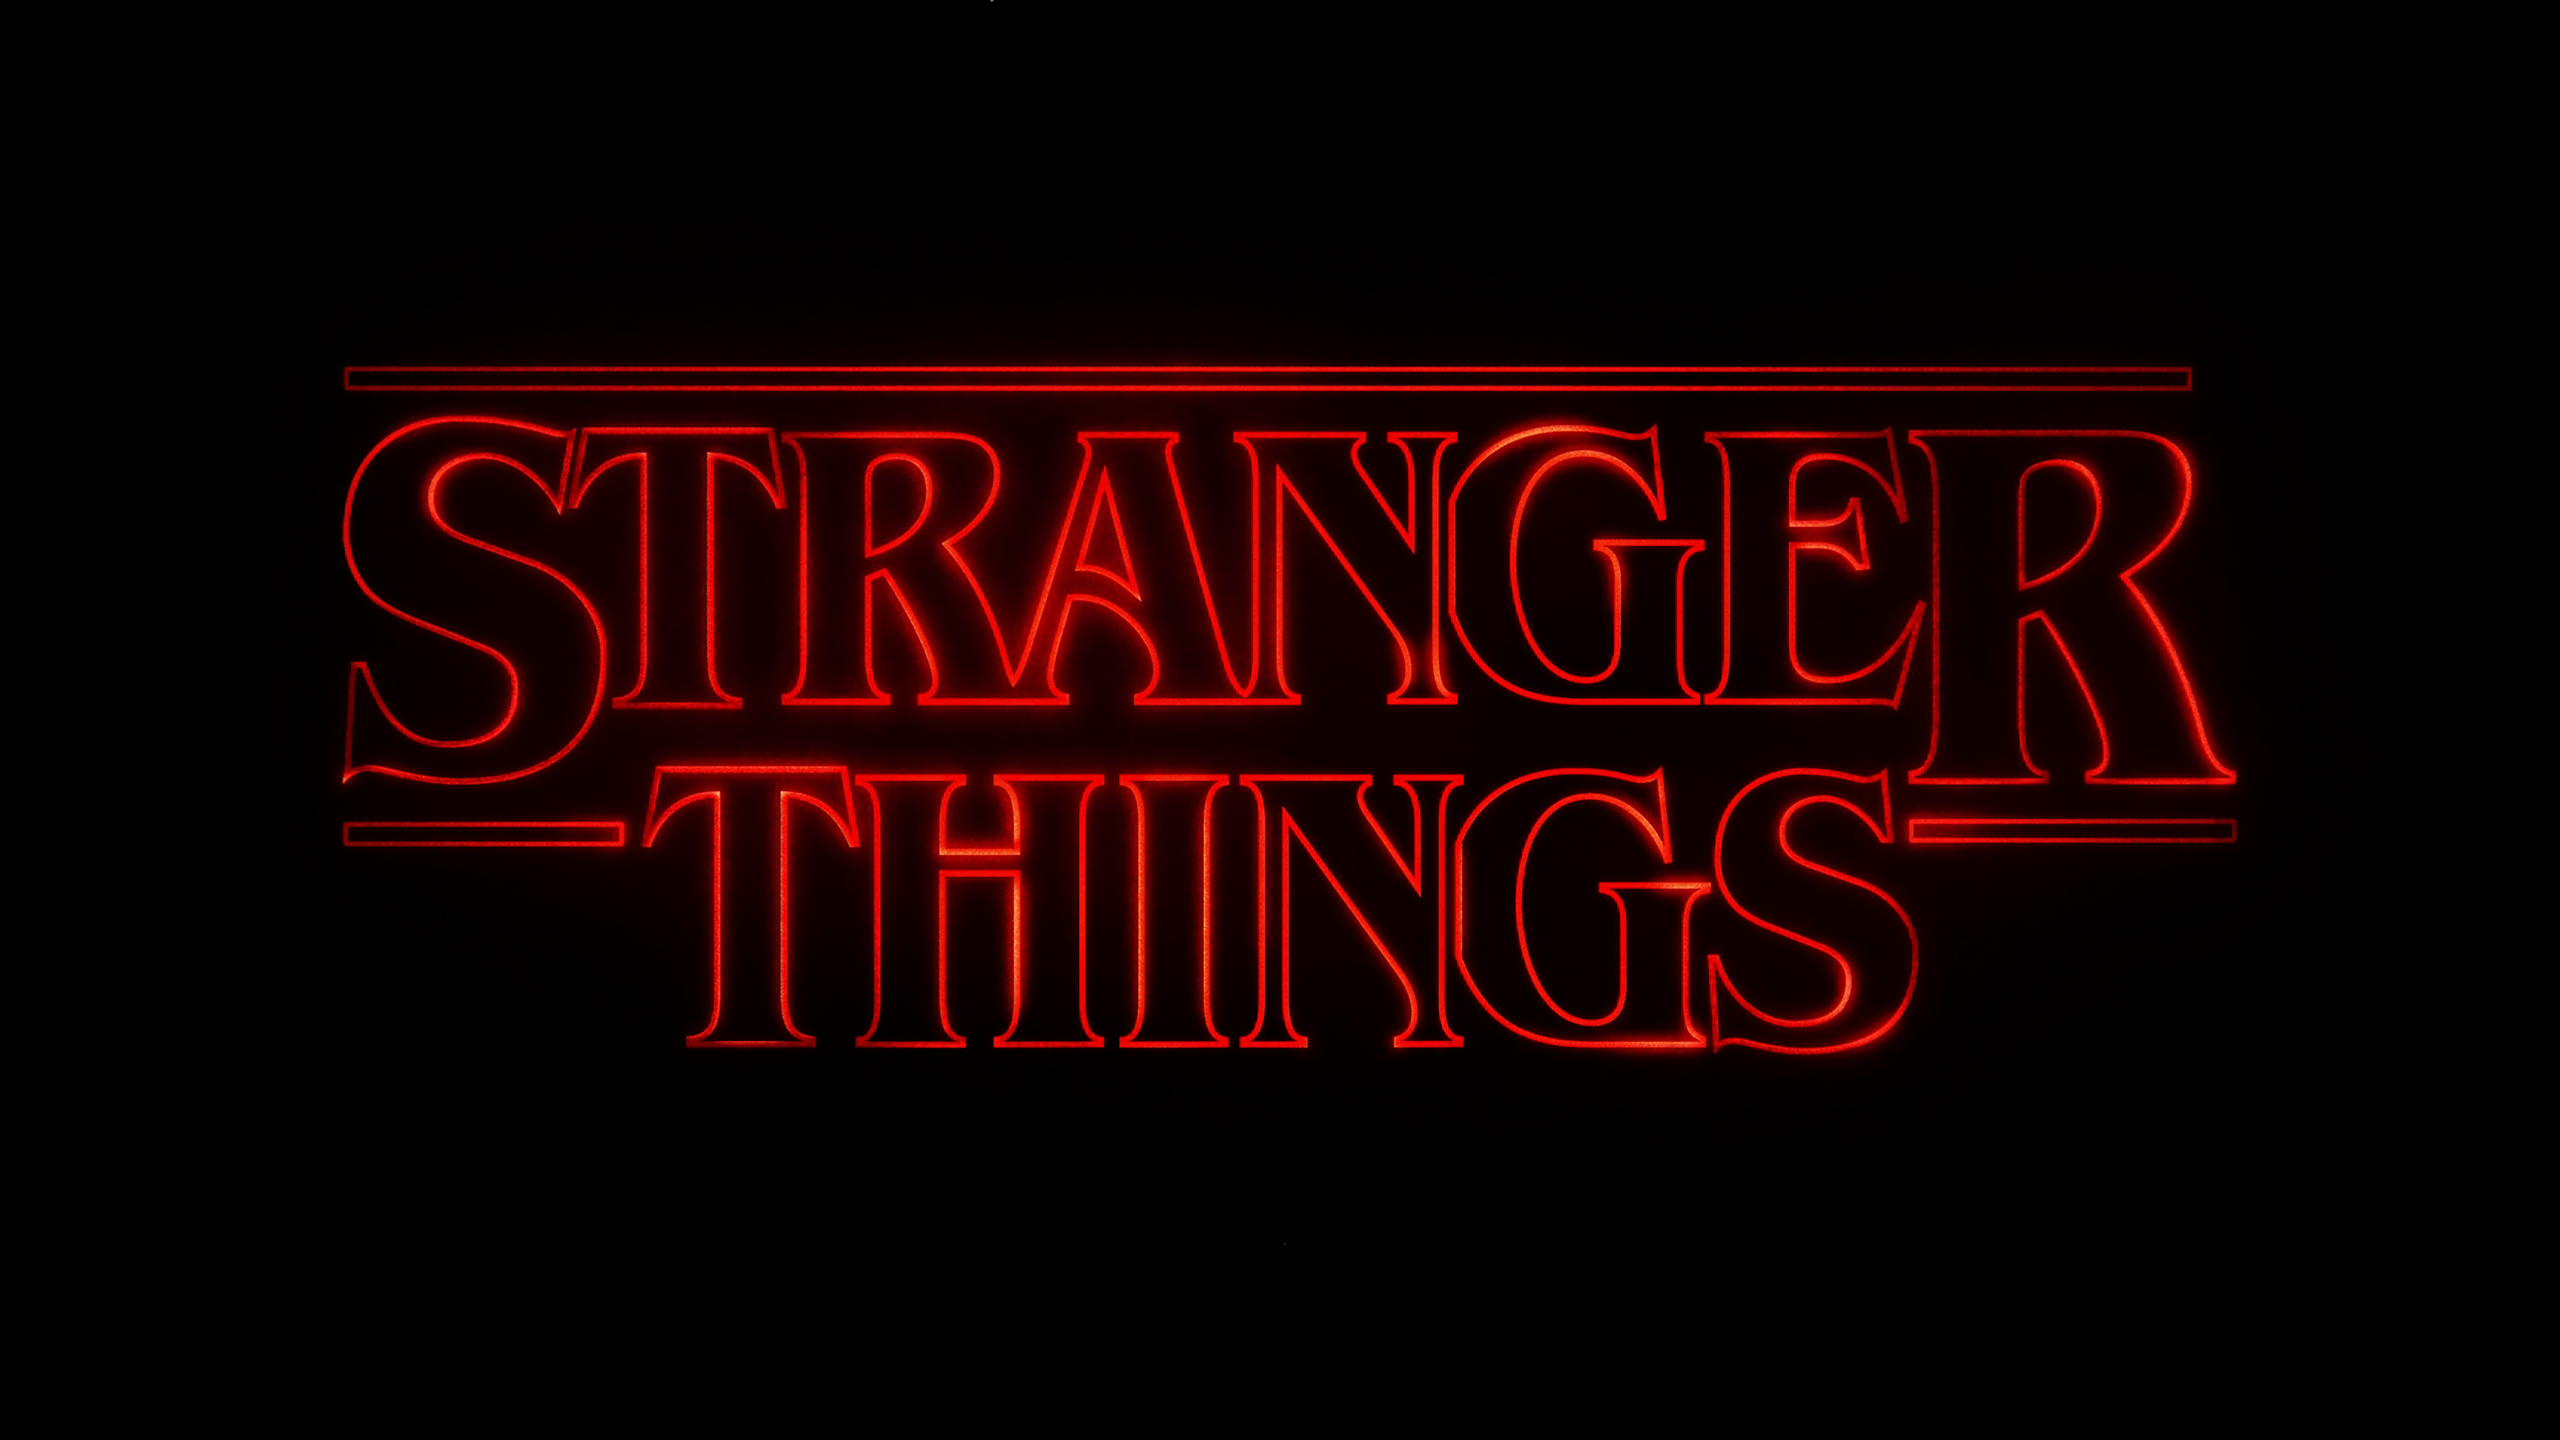 General 2560x1440 Stranger Things logo Netflix minimalism typography black background glowing TV series digital art simple background